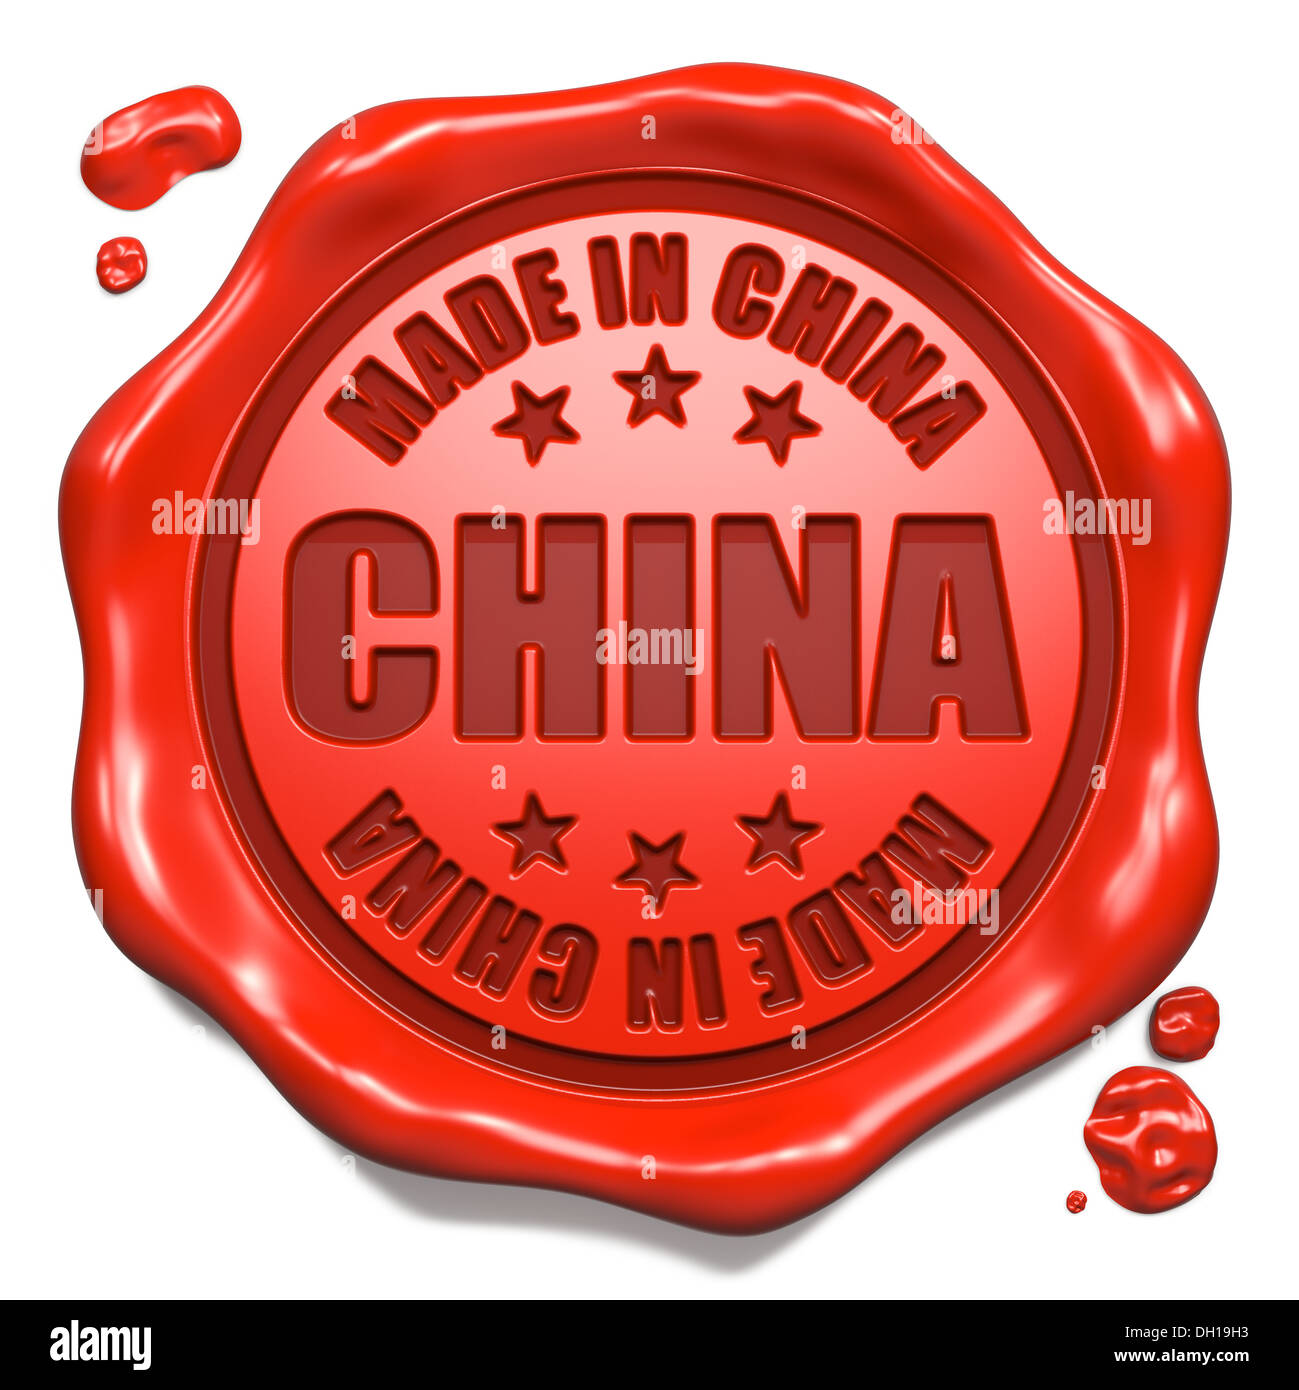 Made in China - Stempel auf Siegel aus rotem Wachs. Stockfoto